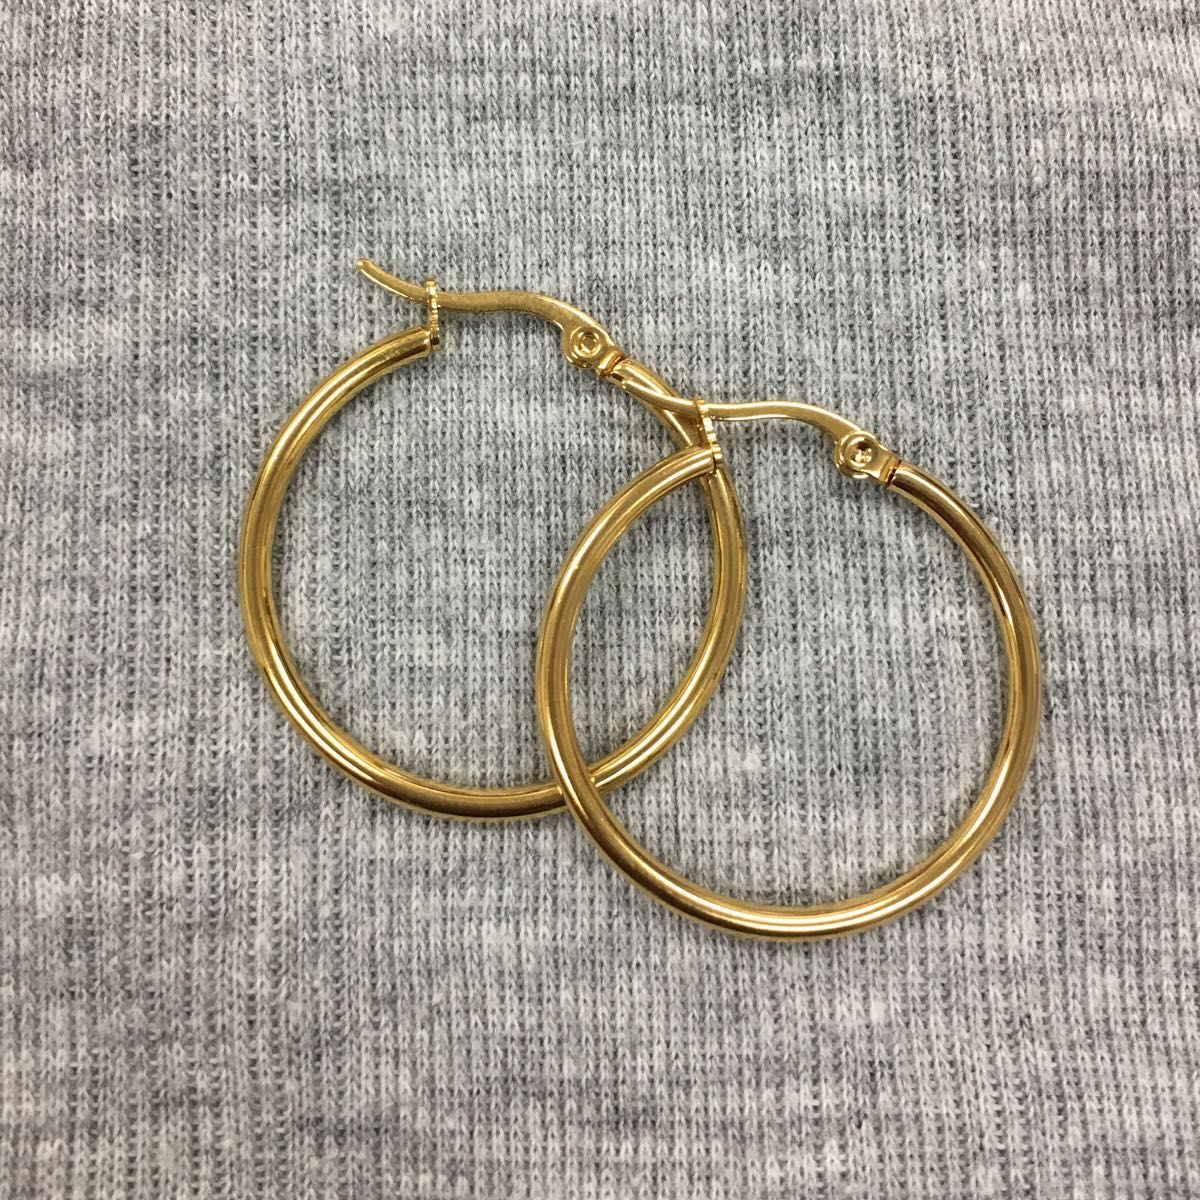 Hoop earrings Gold チャンキーフープピアス 両耳ペア 30mm